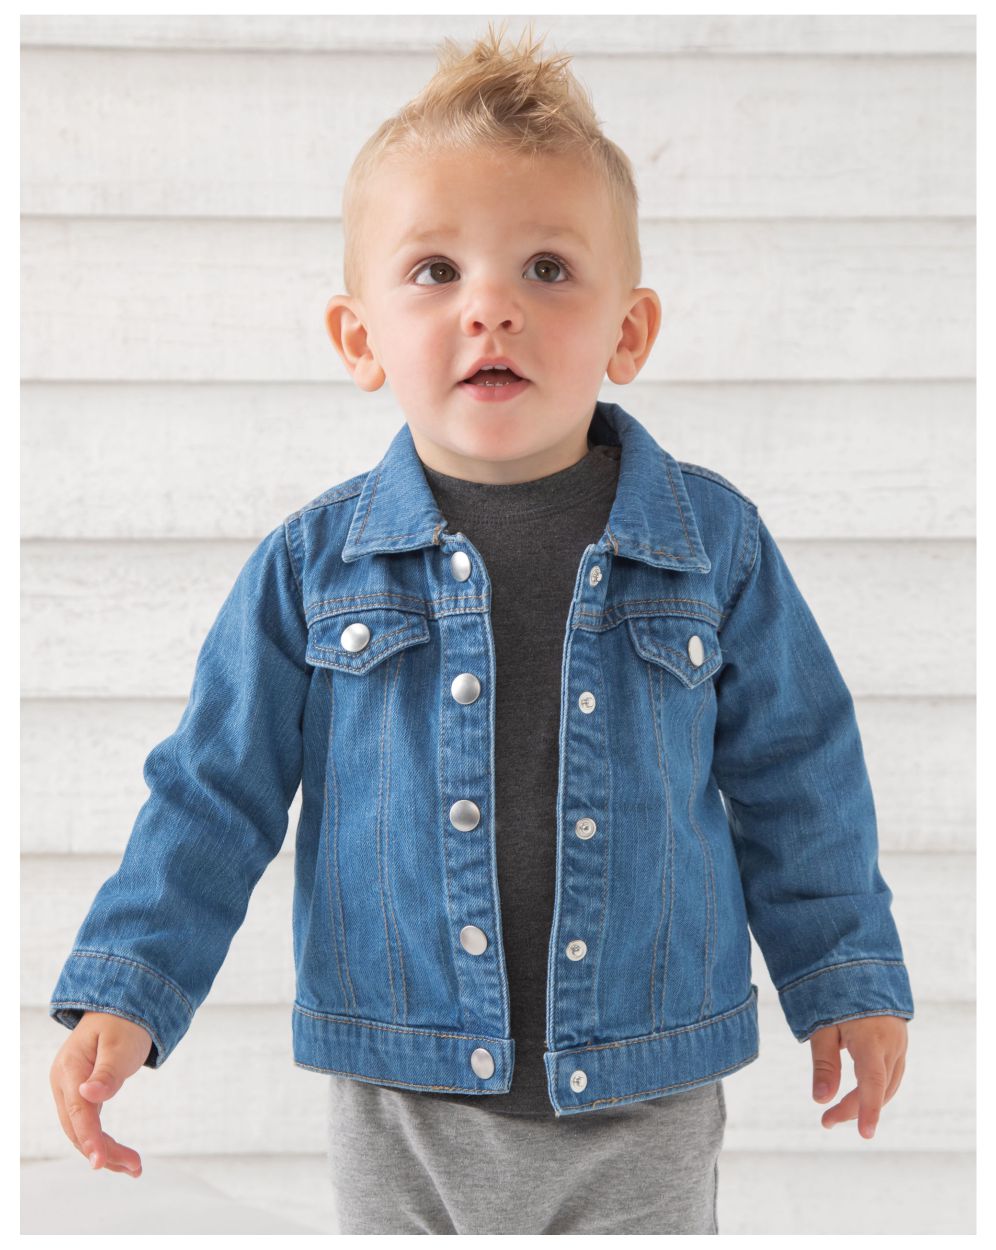 Baby Rocks Denim Jacket - Clothing Solutions